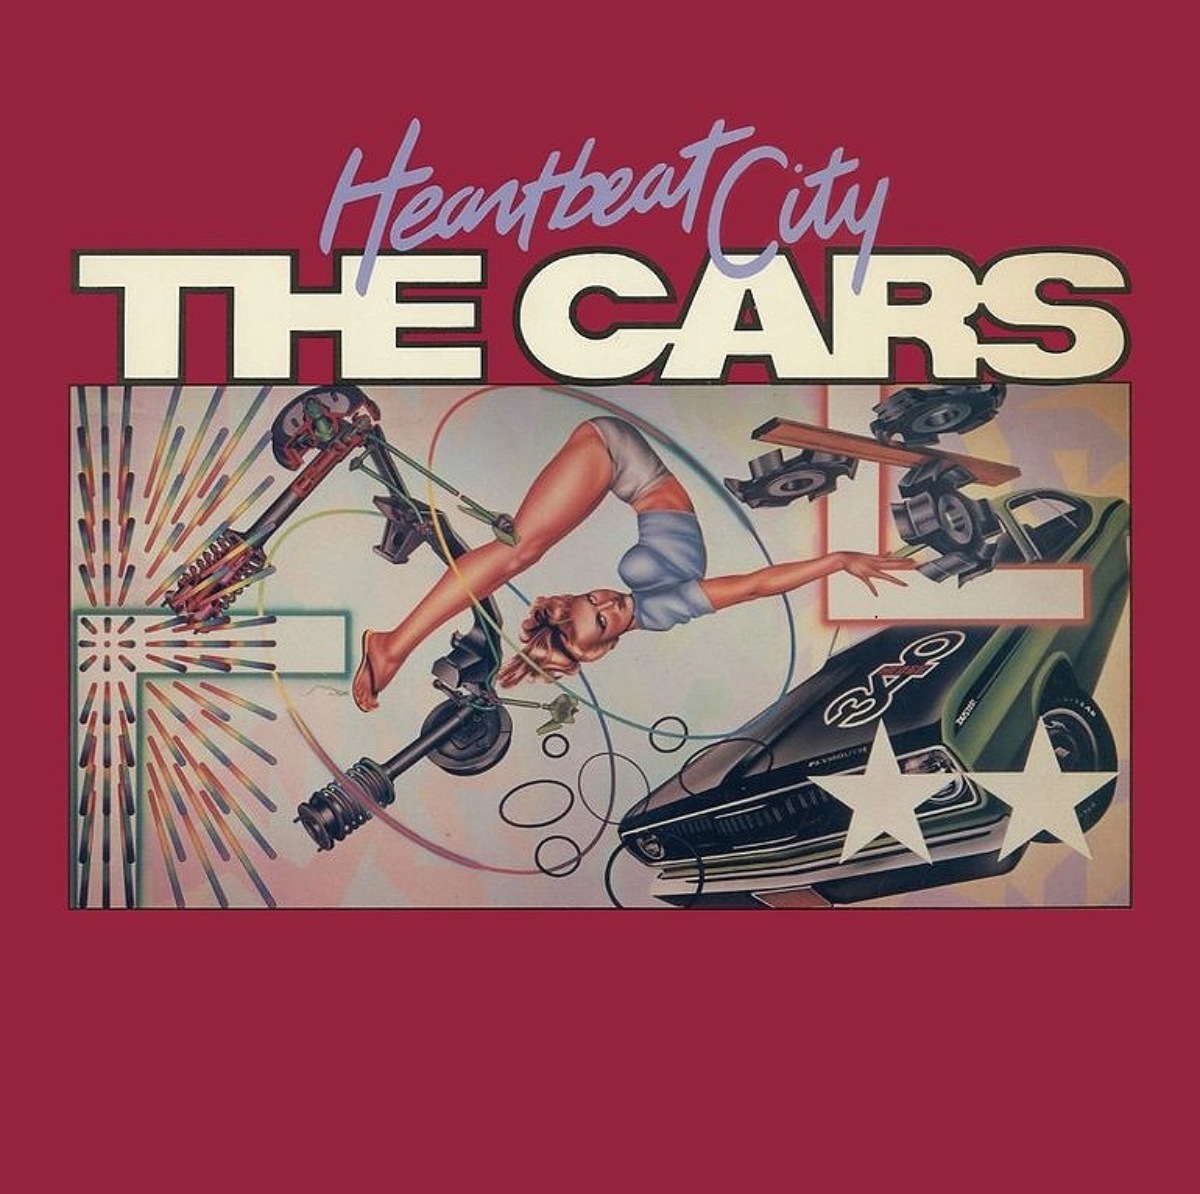 Обложка альбома «Heartbeat City» группы The Cars